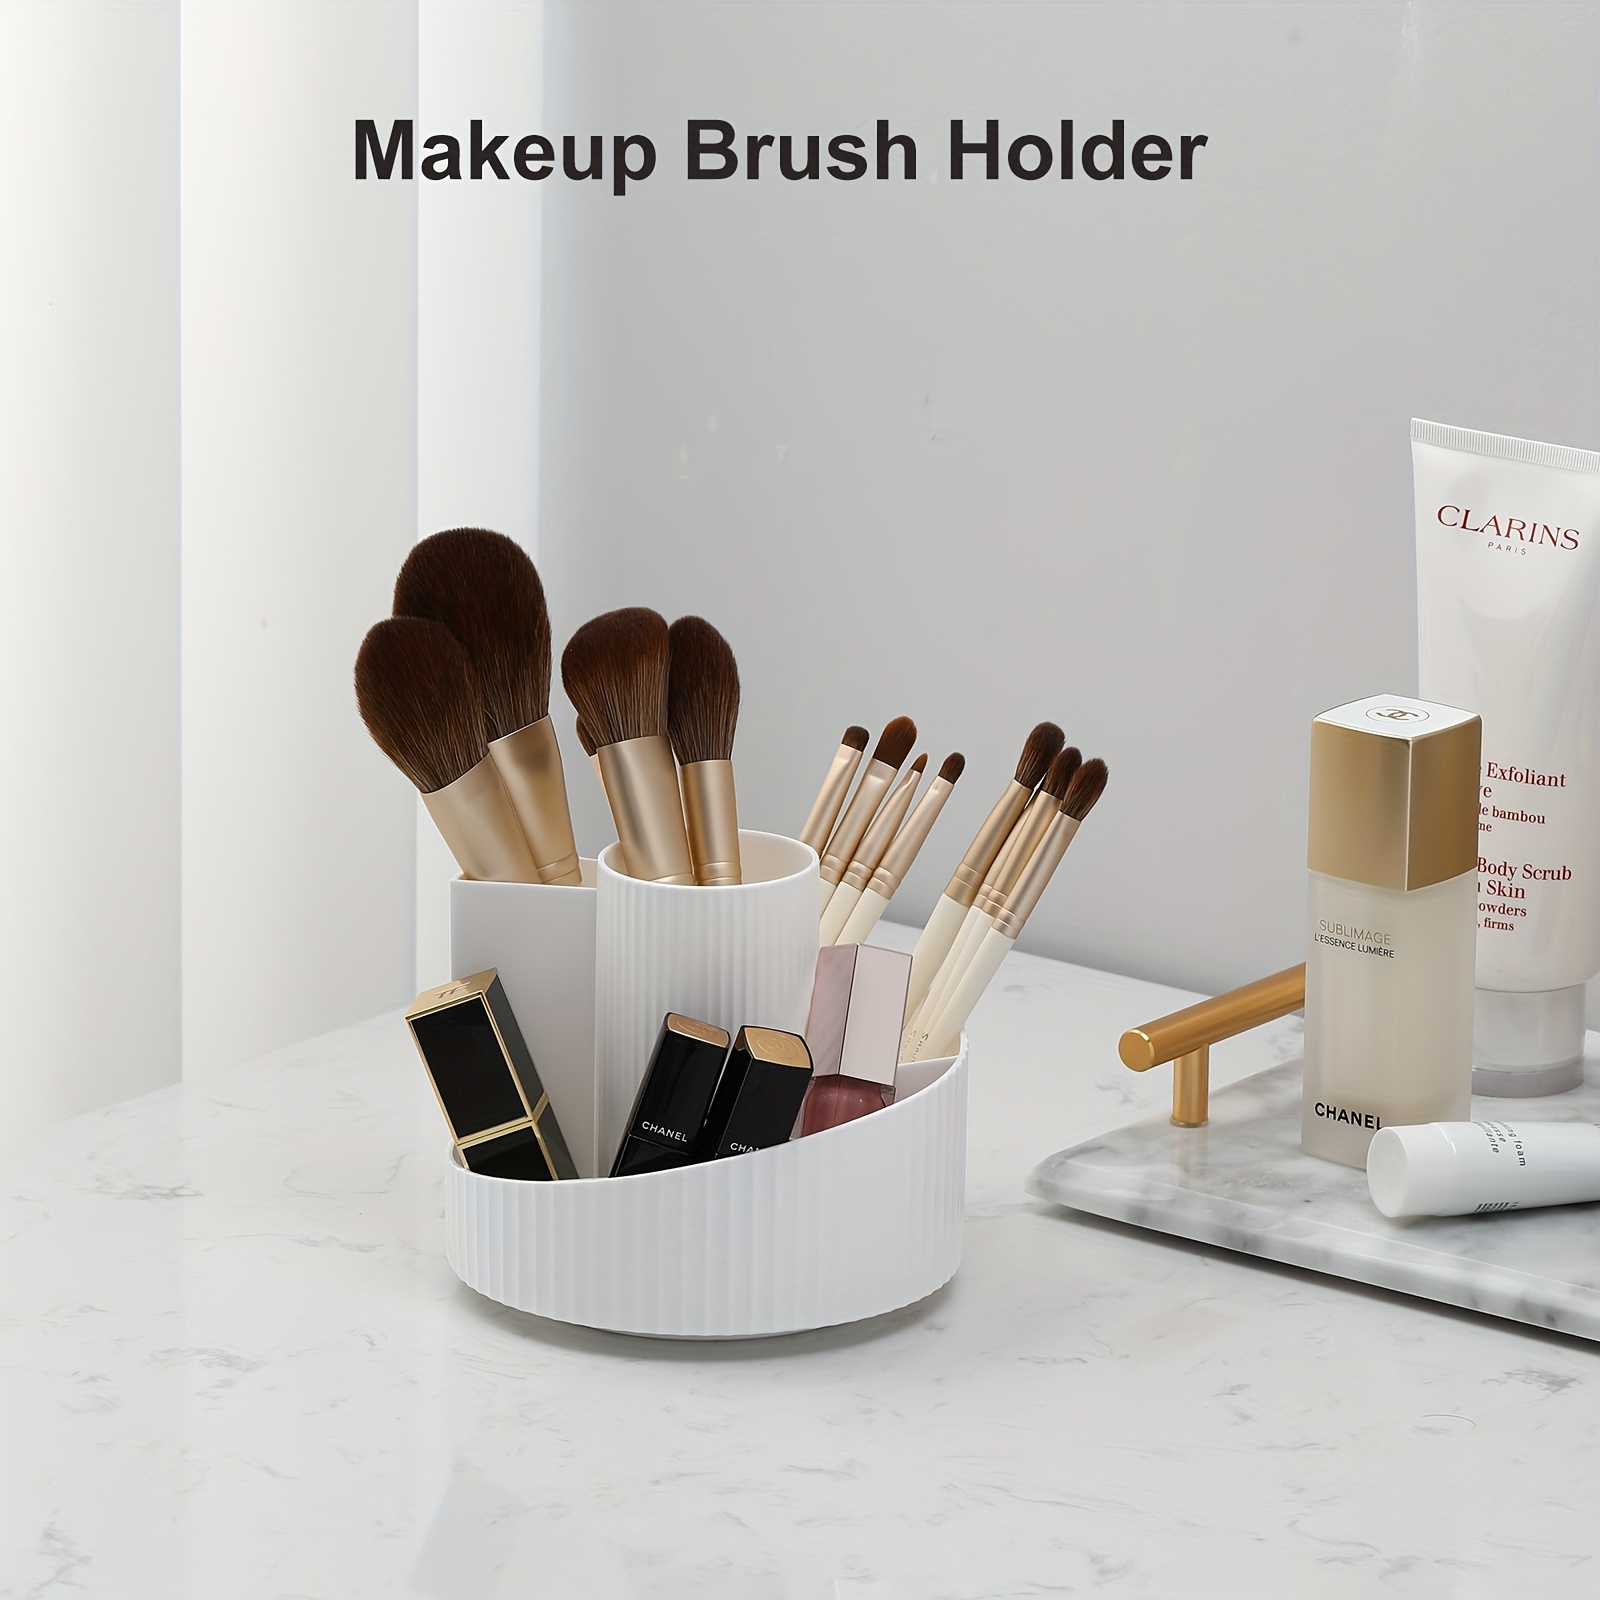 Chanel Makeup Brush Holder